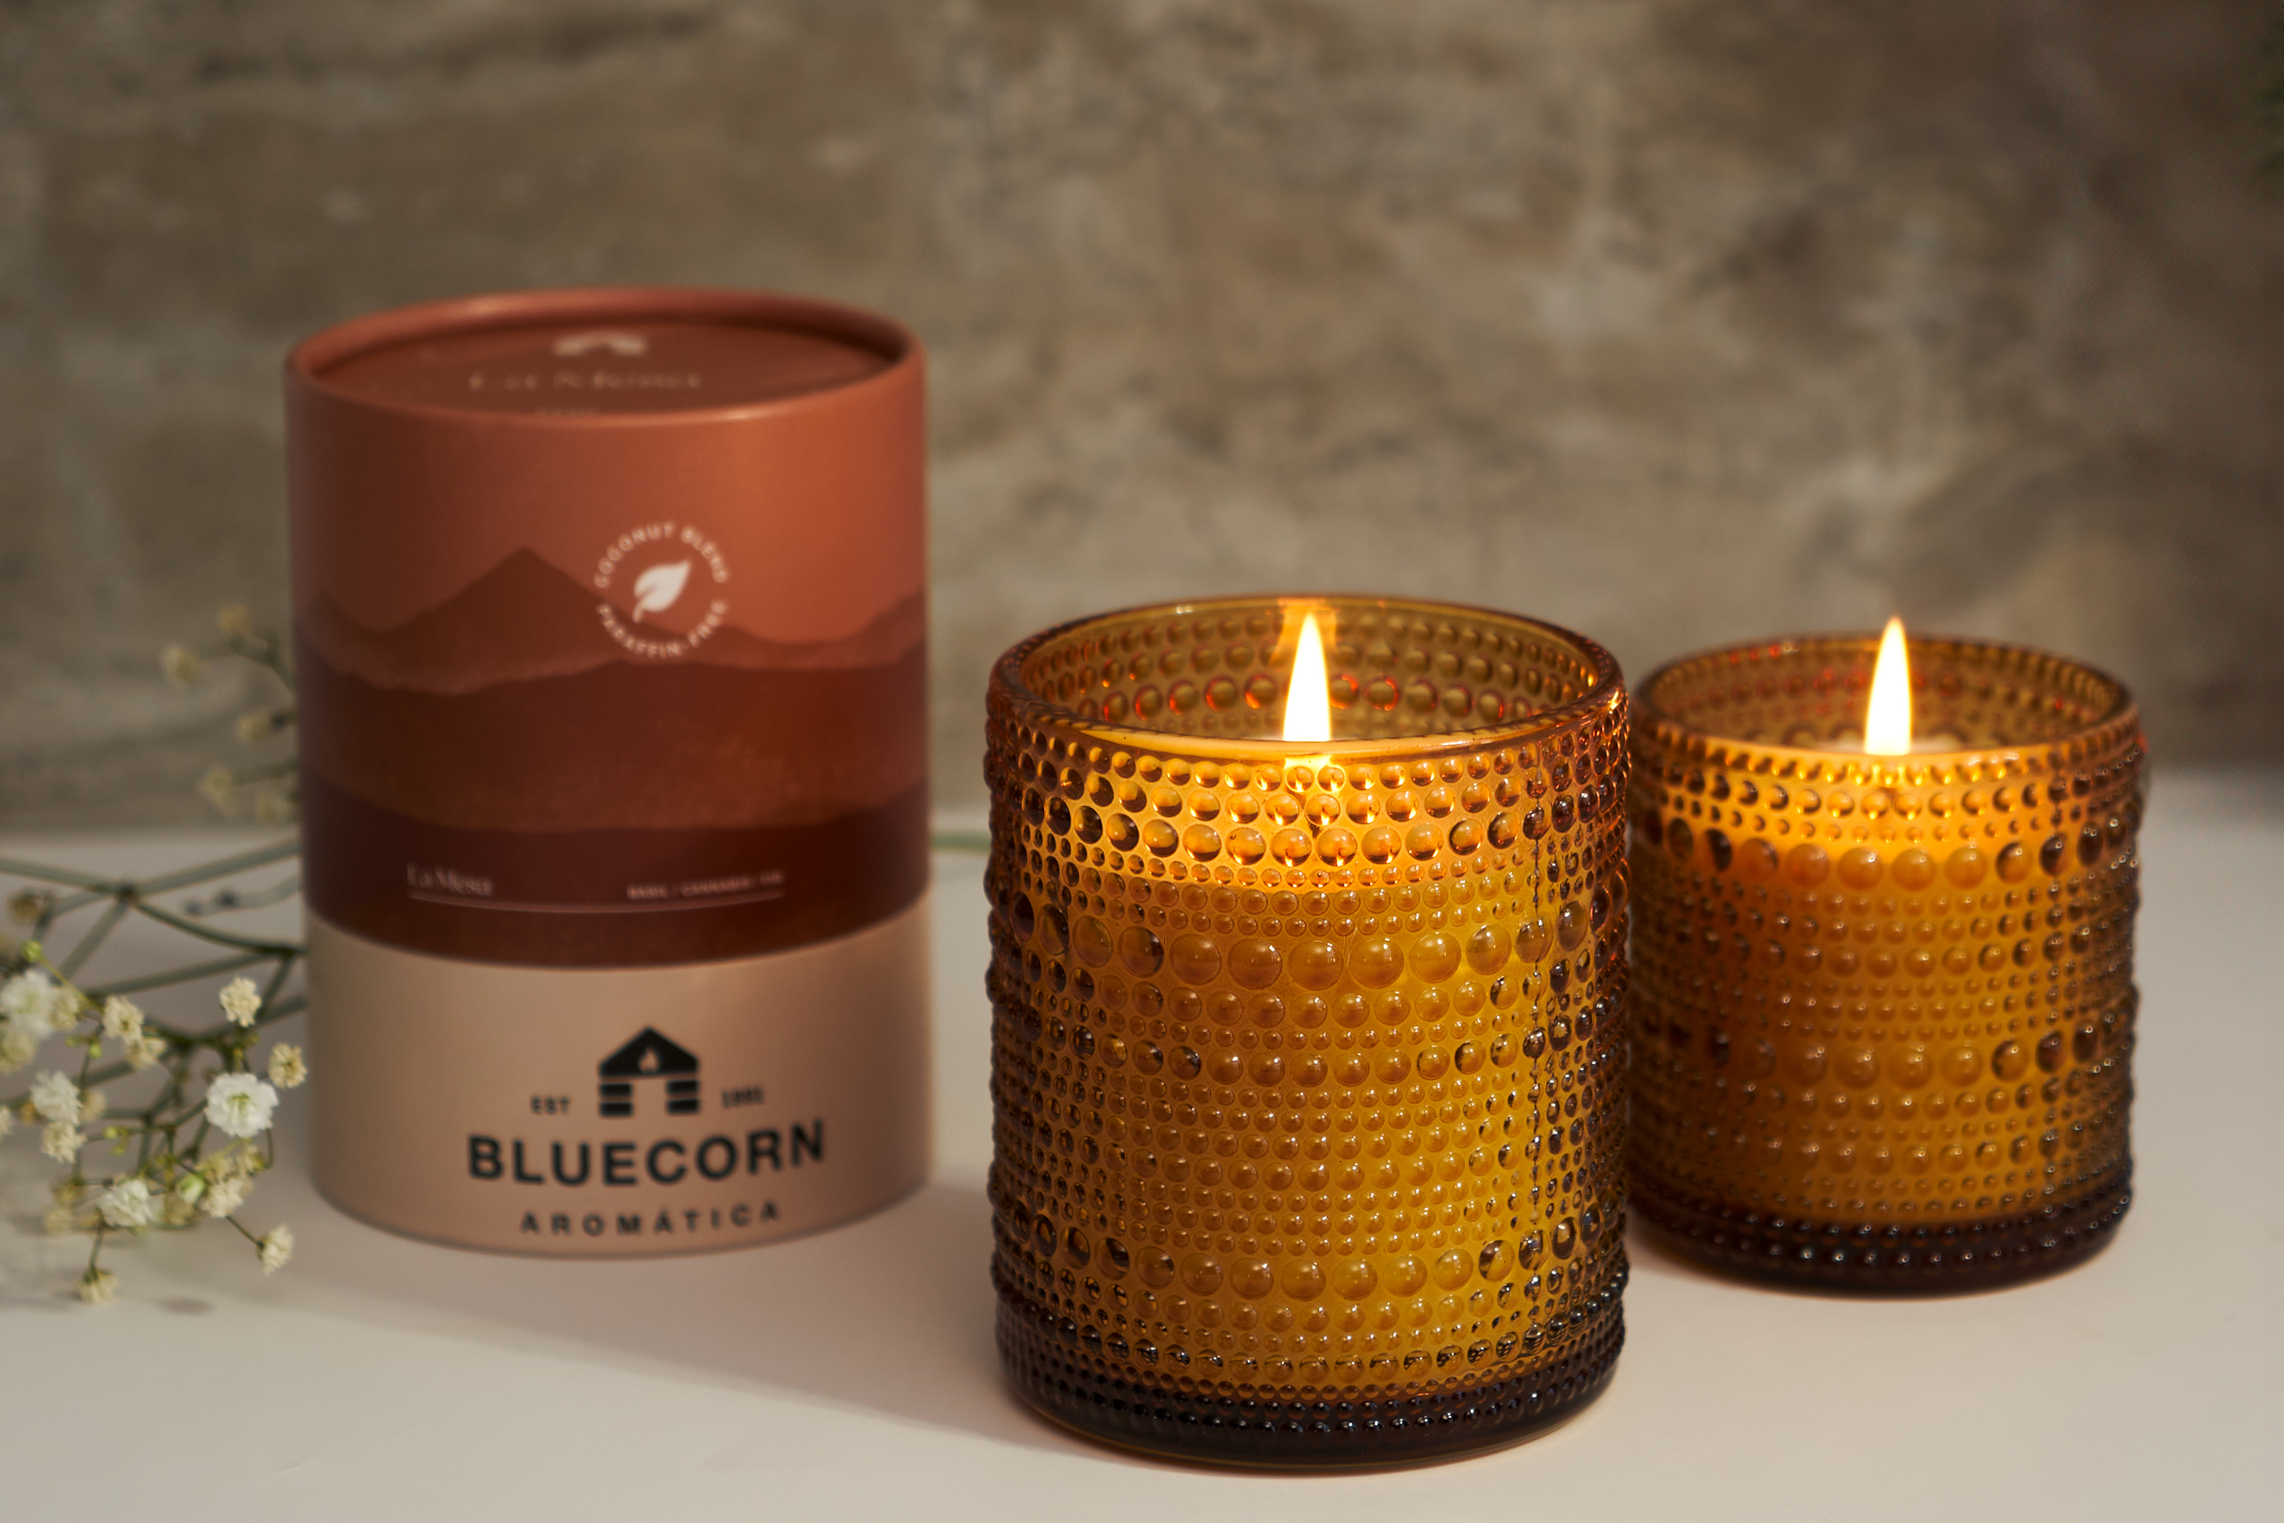  Bluecorn Beeswax 100% Pure Beeswax Pillar Candles, Ivory White  Beeswax Candles, Unscented Candles, Soy, Paraffin, & Fragrance Free, 2x3,  25 Hour Burn Time